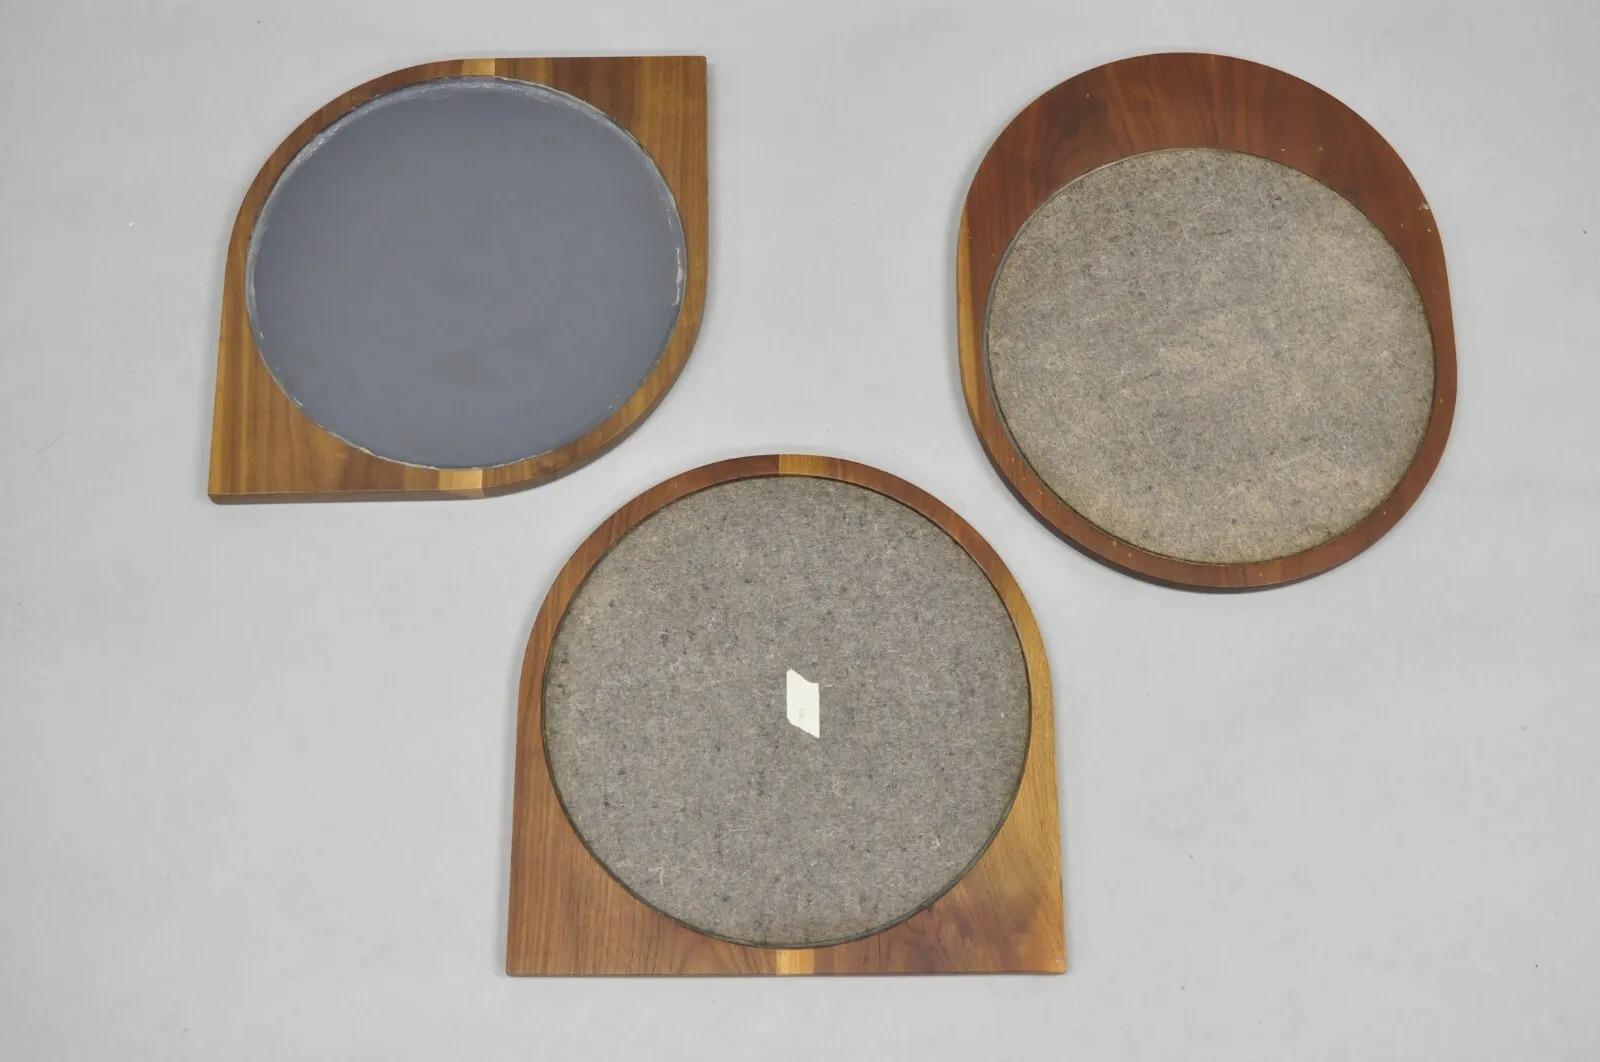 Mid Century Danish Modern Sculpted Teak Wood Mirrors - 3 pc Set For Sale 4